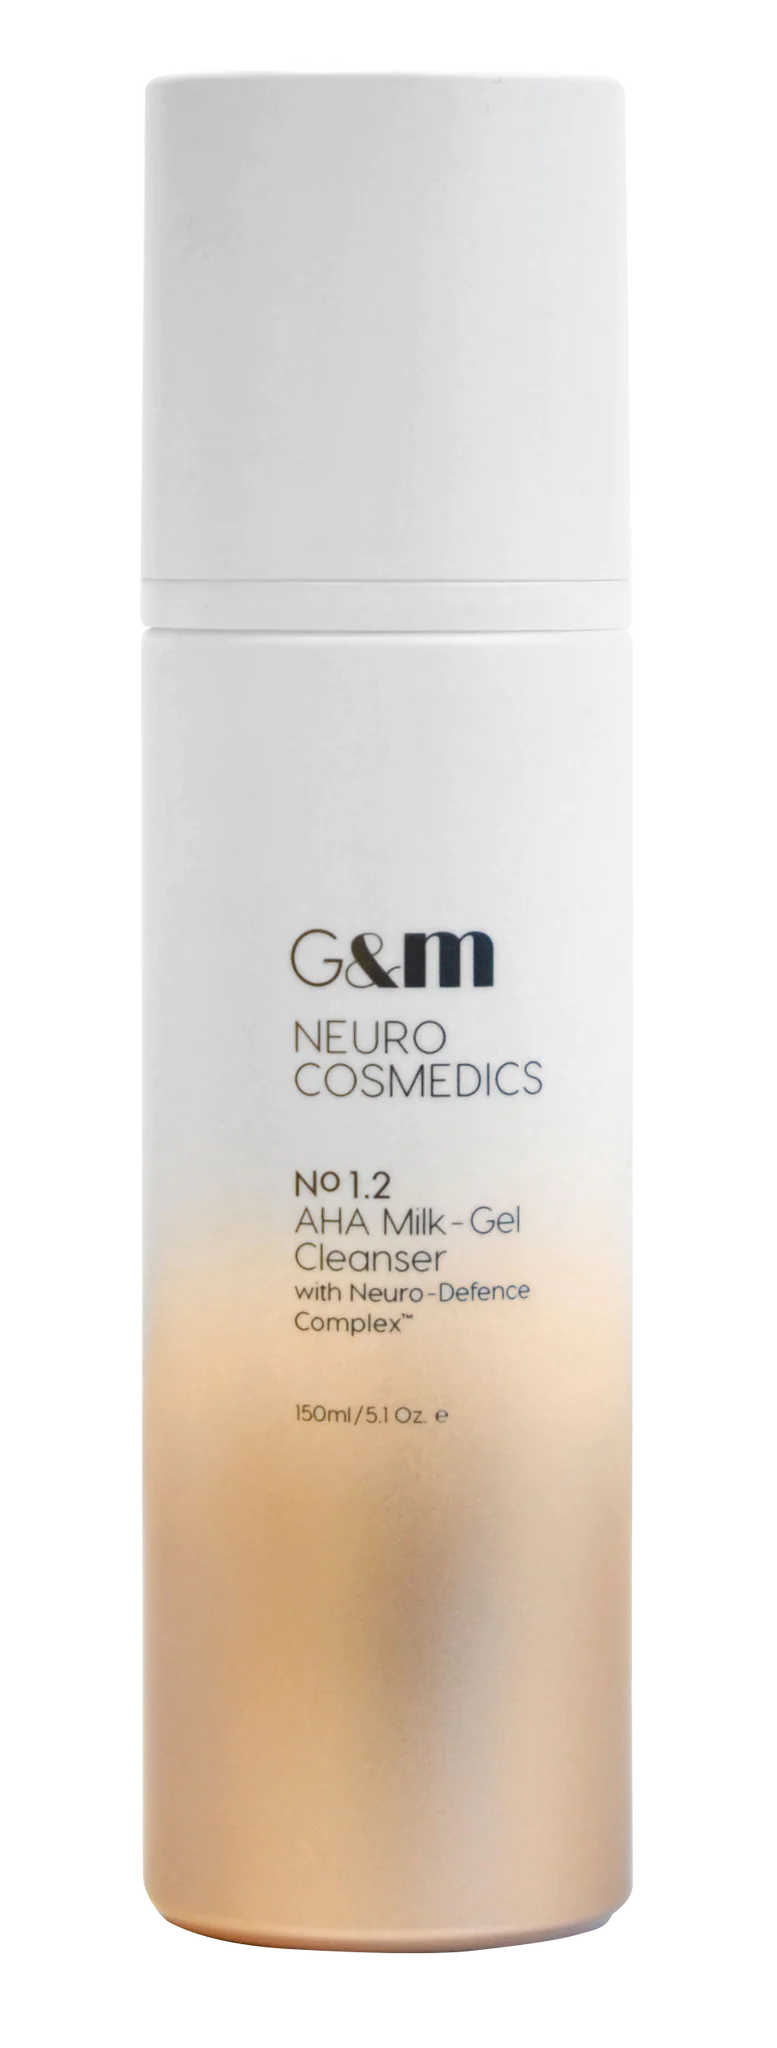 Neurocosmedics AHA Milk Gel Cleanser 150ml